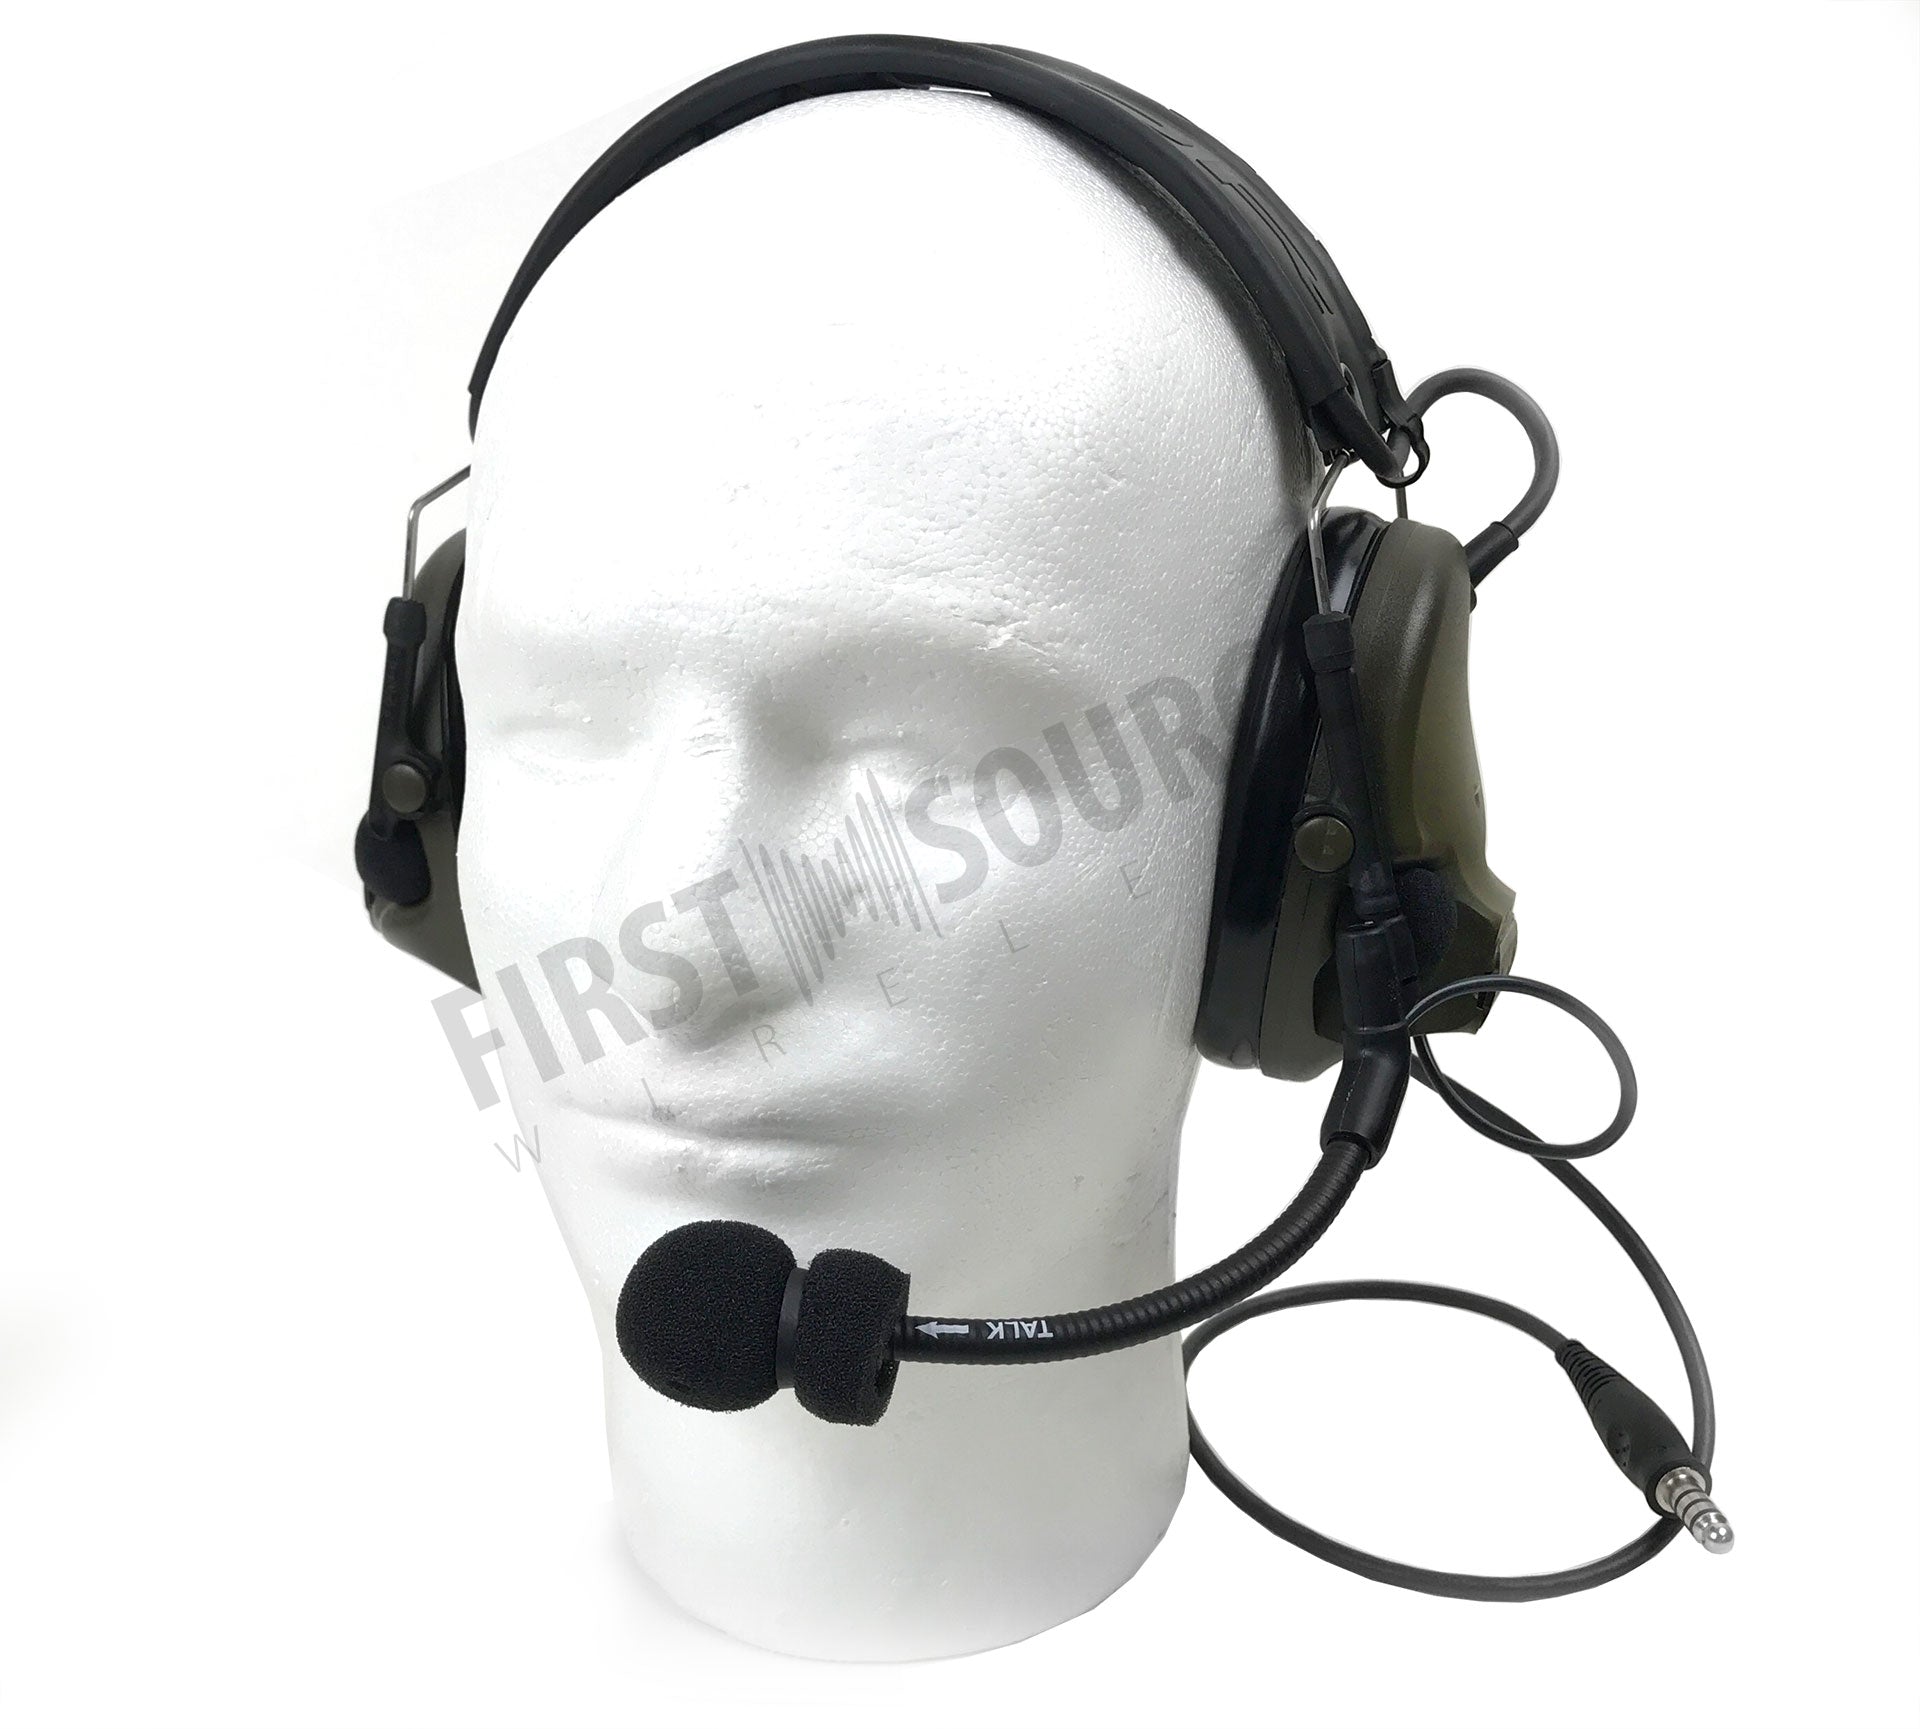 3M PELTOR ComTac V Headset MT20H682FB-47 GN, opvouwbaar, enkele kabel, standaard dynamische microfoon, NATO-bedrading, groen